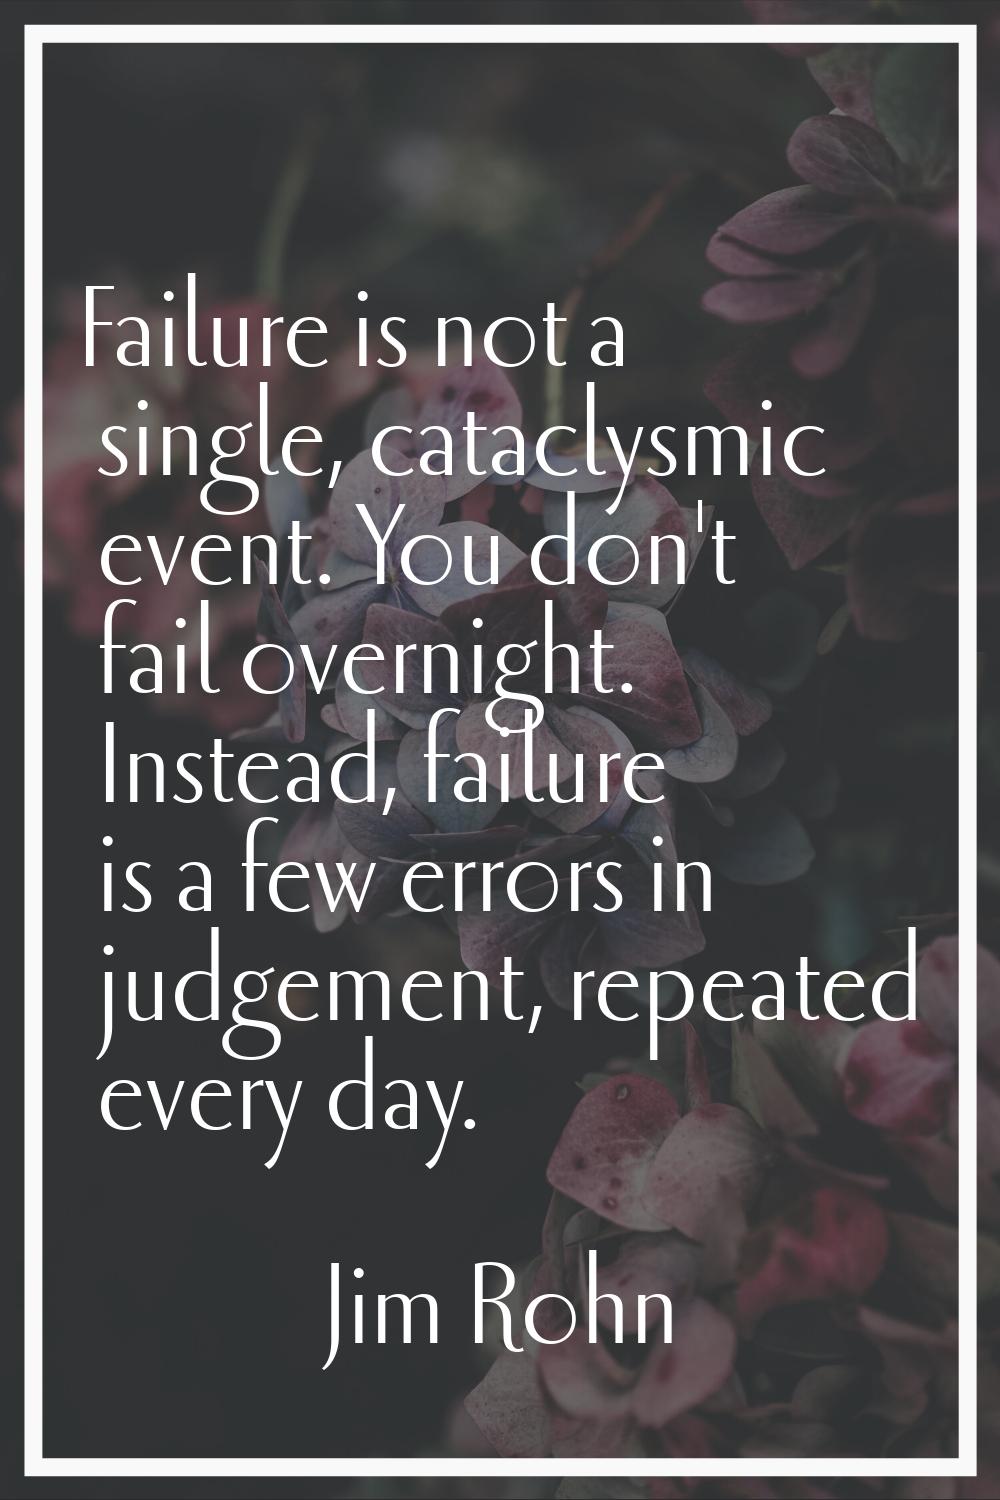 Failure is not a single, cataclysmic event. You don't fail overnight. Instead, failure is a few err